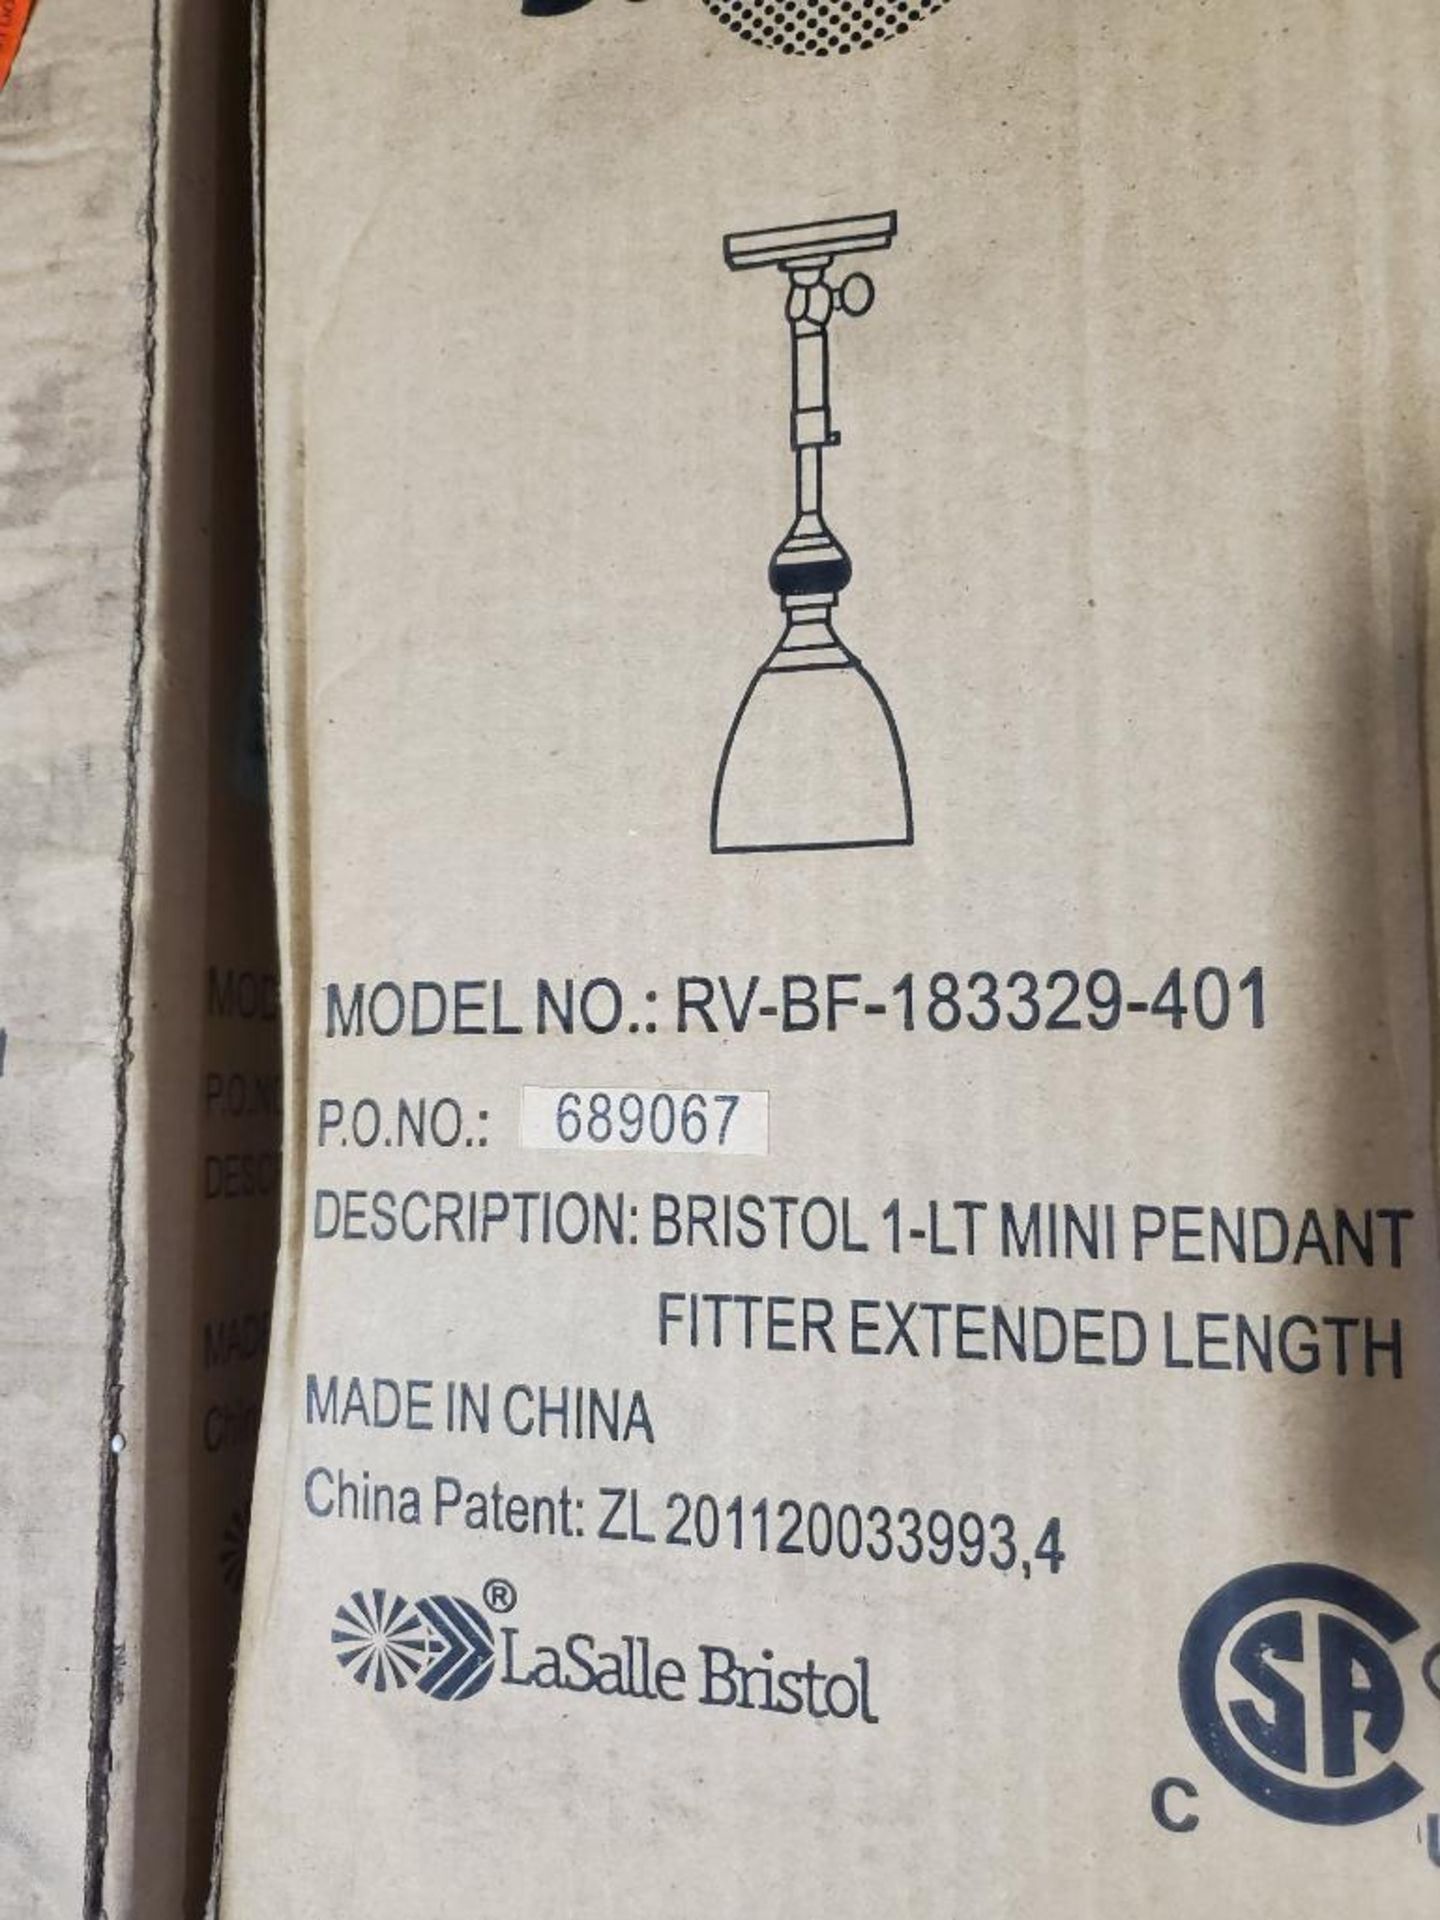 Qty 28 - SunLink 12 volt mini pendant single bulb light. Part # RV-183329-401. New in bulk box. - Image 7 of 8